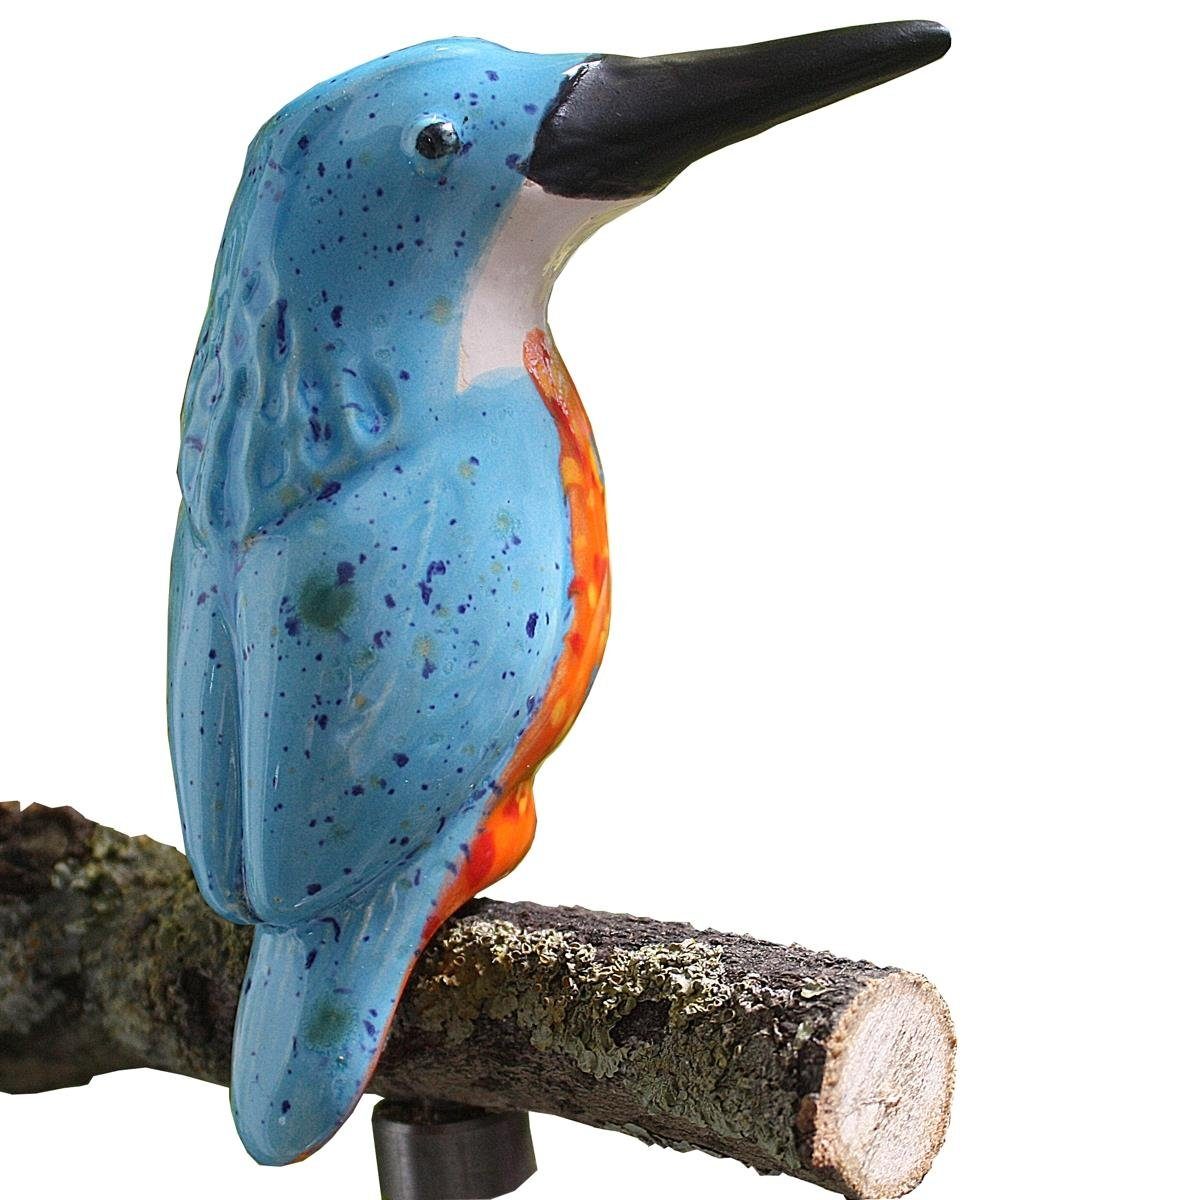 Tangoo Gartenfigur Tangoo Keramik-Eis-Vogel türkis, blau gepunktet auf Stab mit Ast, (Stück)